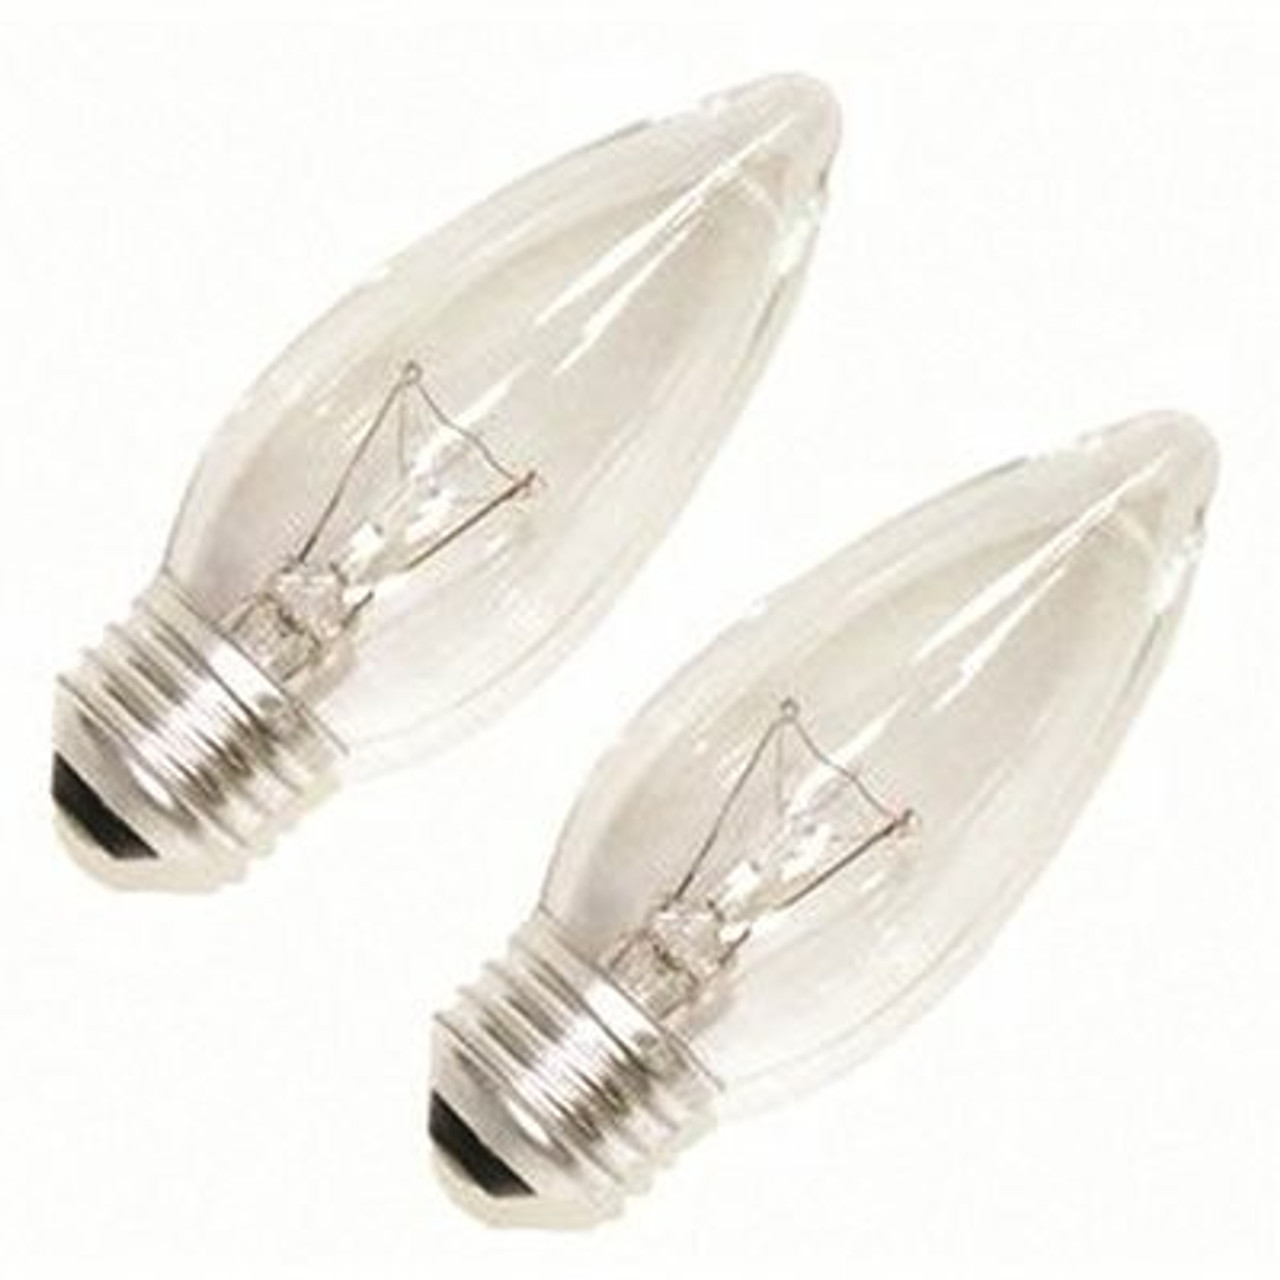 Sylvania 40-Watt Double Life B13 Incandescent Light Bulb (2-Pack)